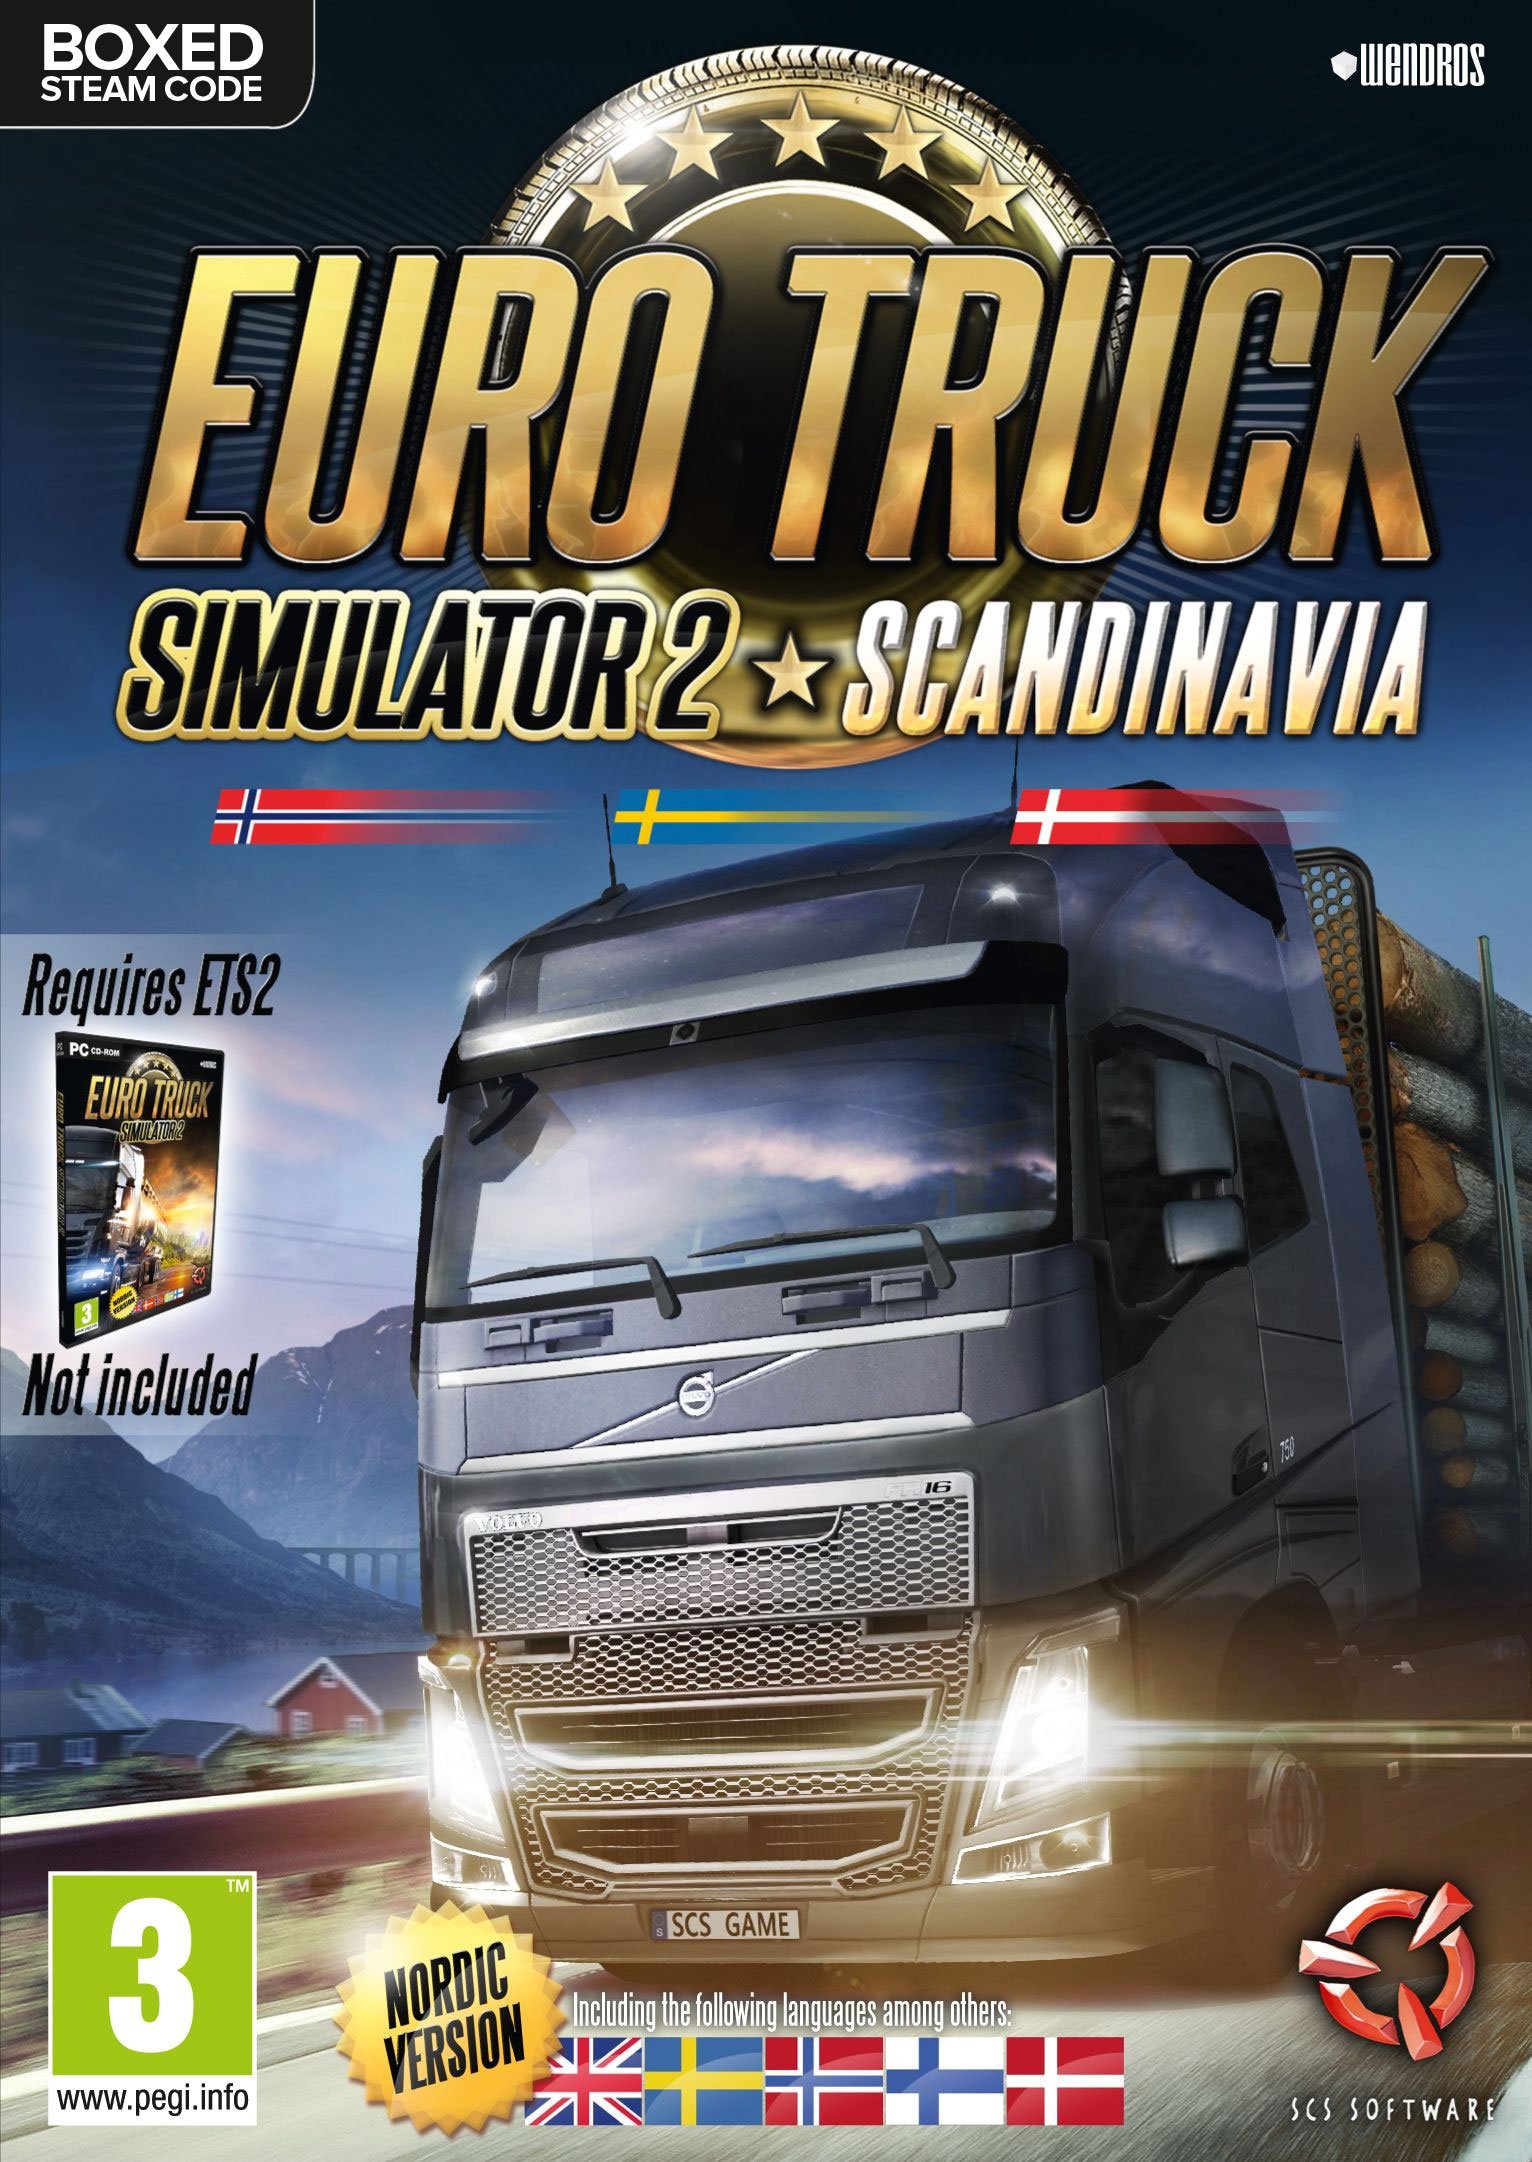 Euro truck simulator ps2